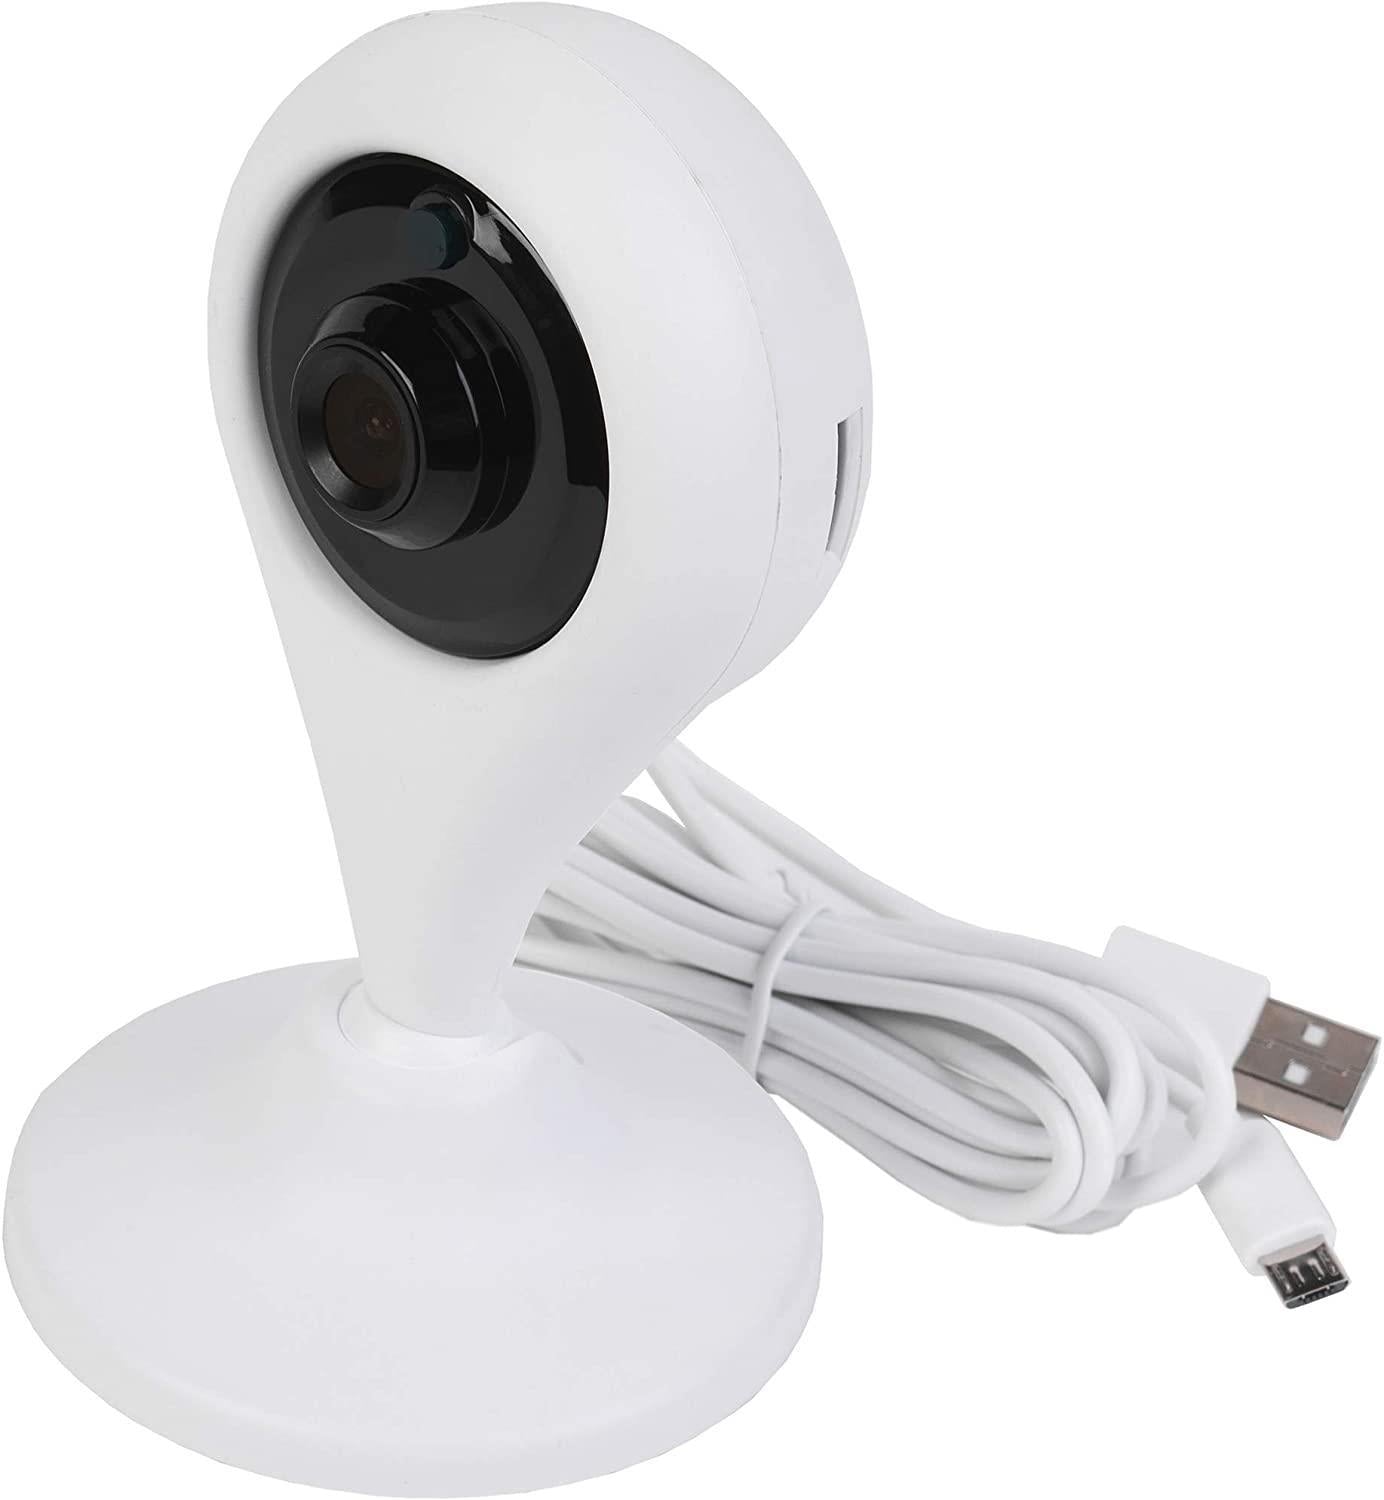 Intempo Indoor Security Smart IP Camera 720p